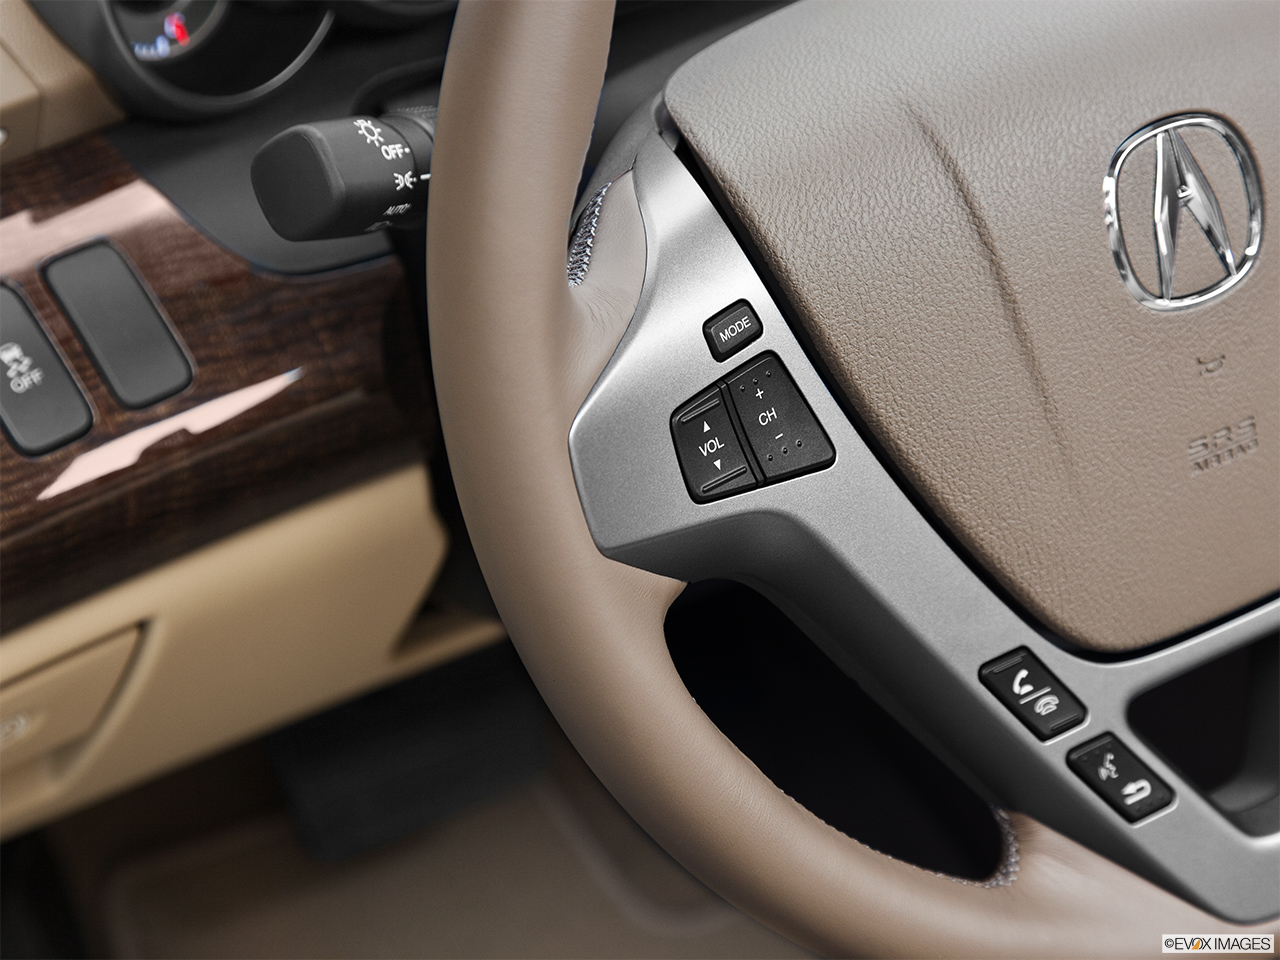 2012 Acura MDX MDX Steering Wheel Controls (Left Side) 